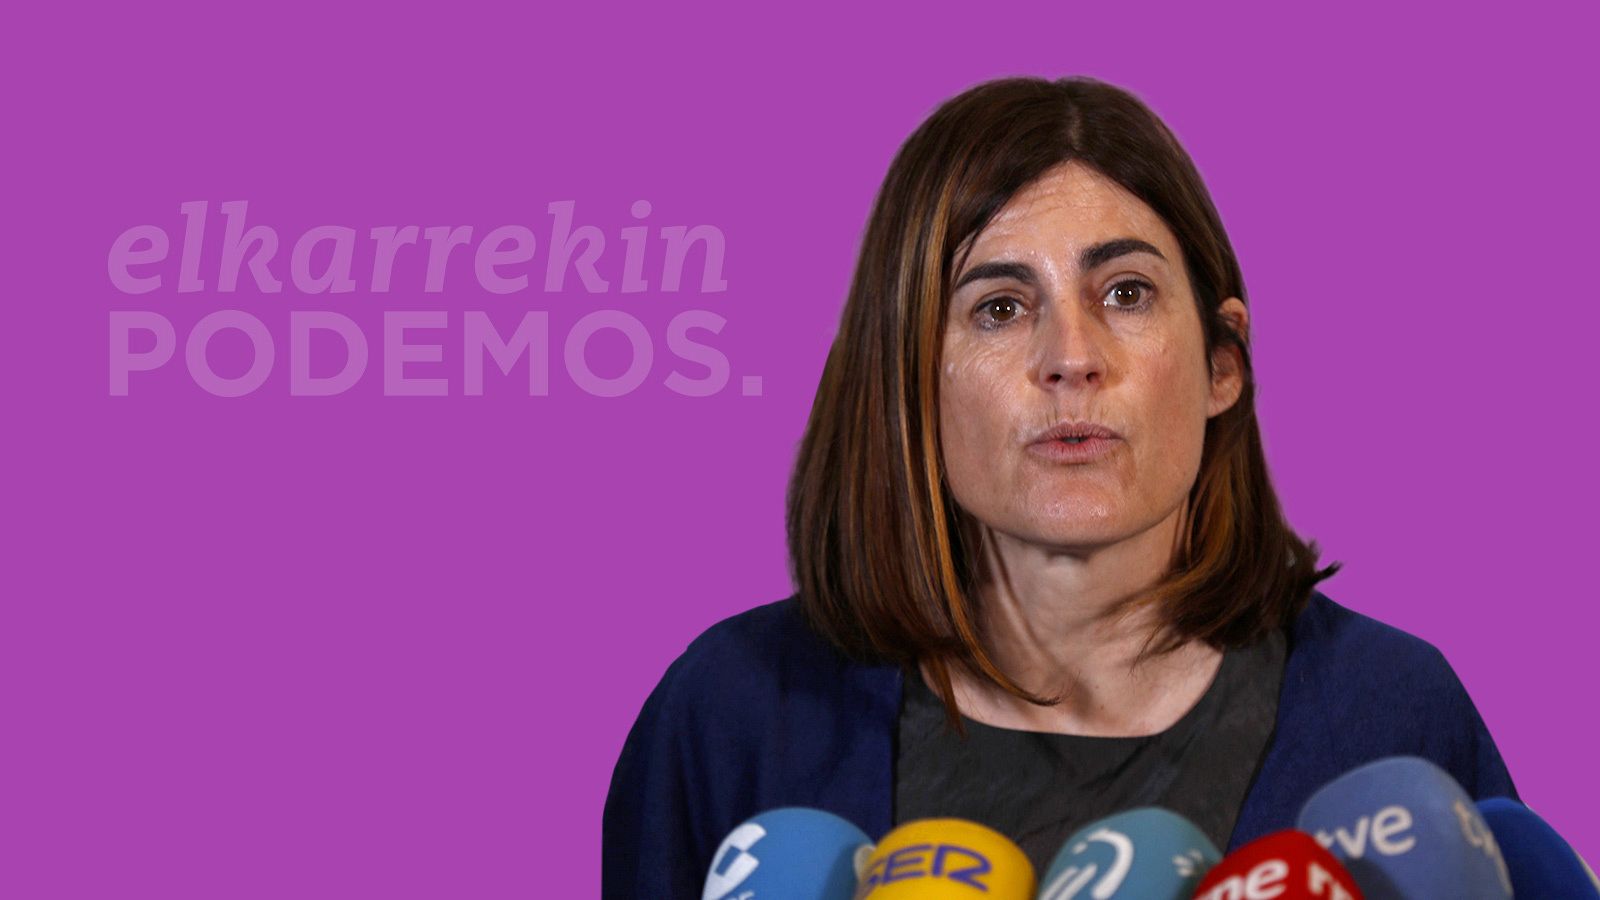 Elecciones vascas: Miren Gorrotxategi, la candidata 'pablista| RTVE